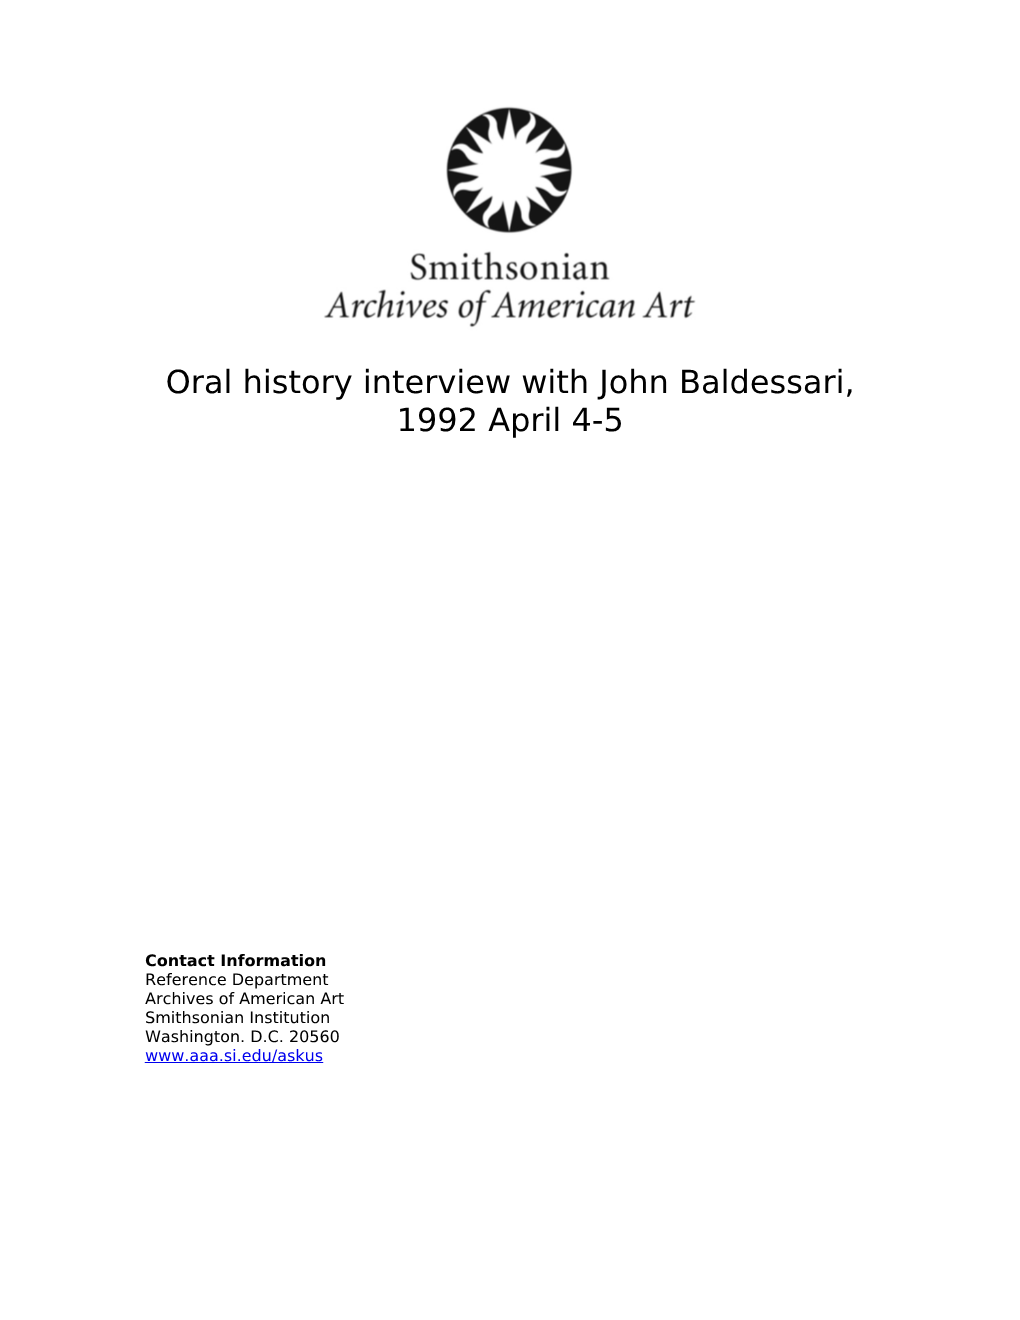 Oral History Interview with John Baldessari, 1992 April 4-5